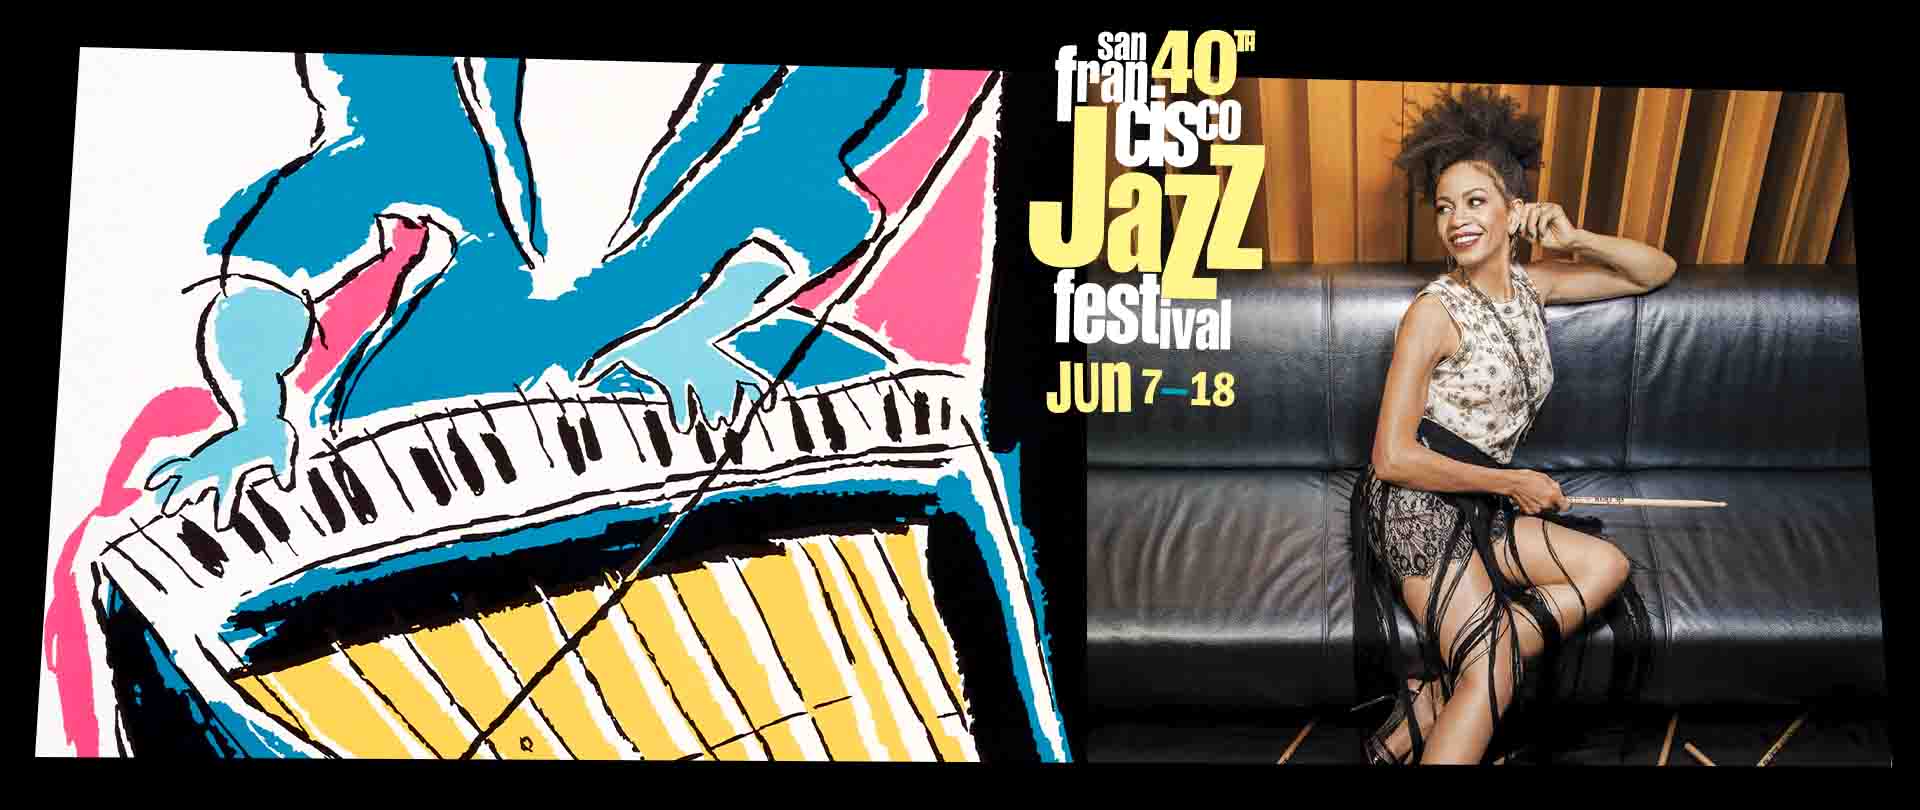 Cindy Blackman with the 40th San Francisco Jazz Festival logo